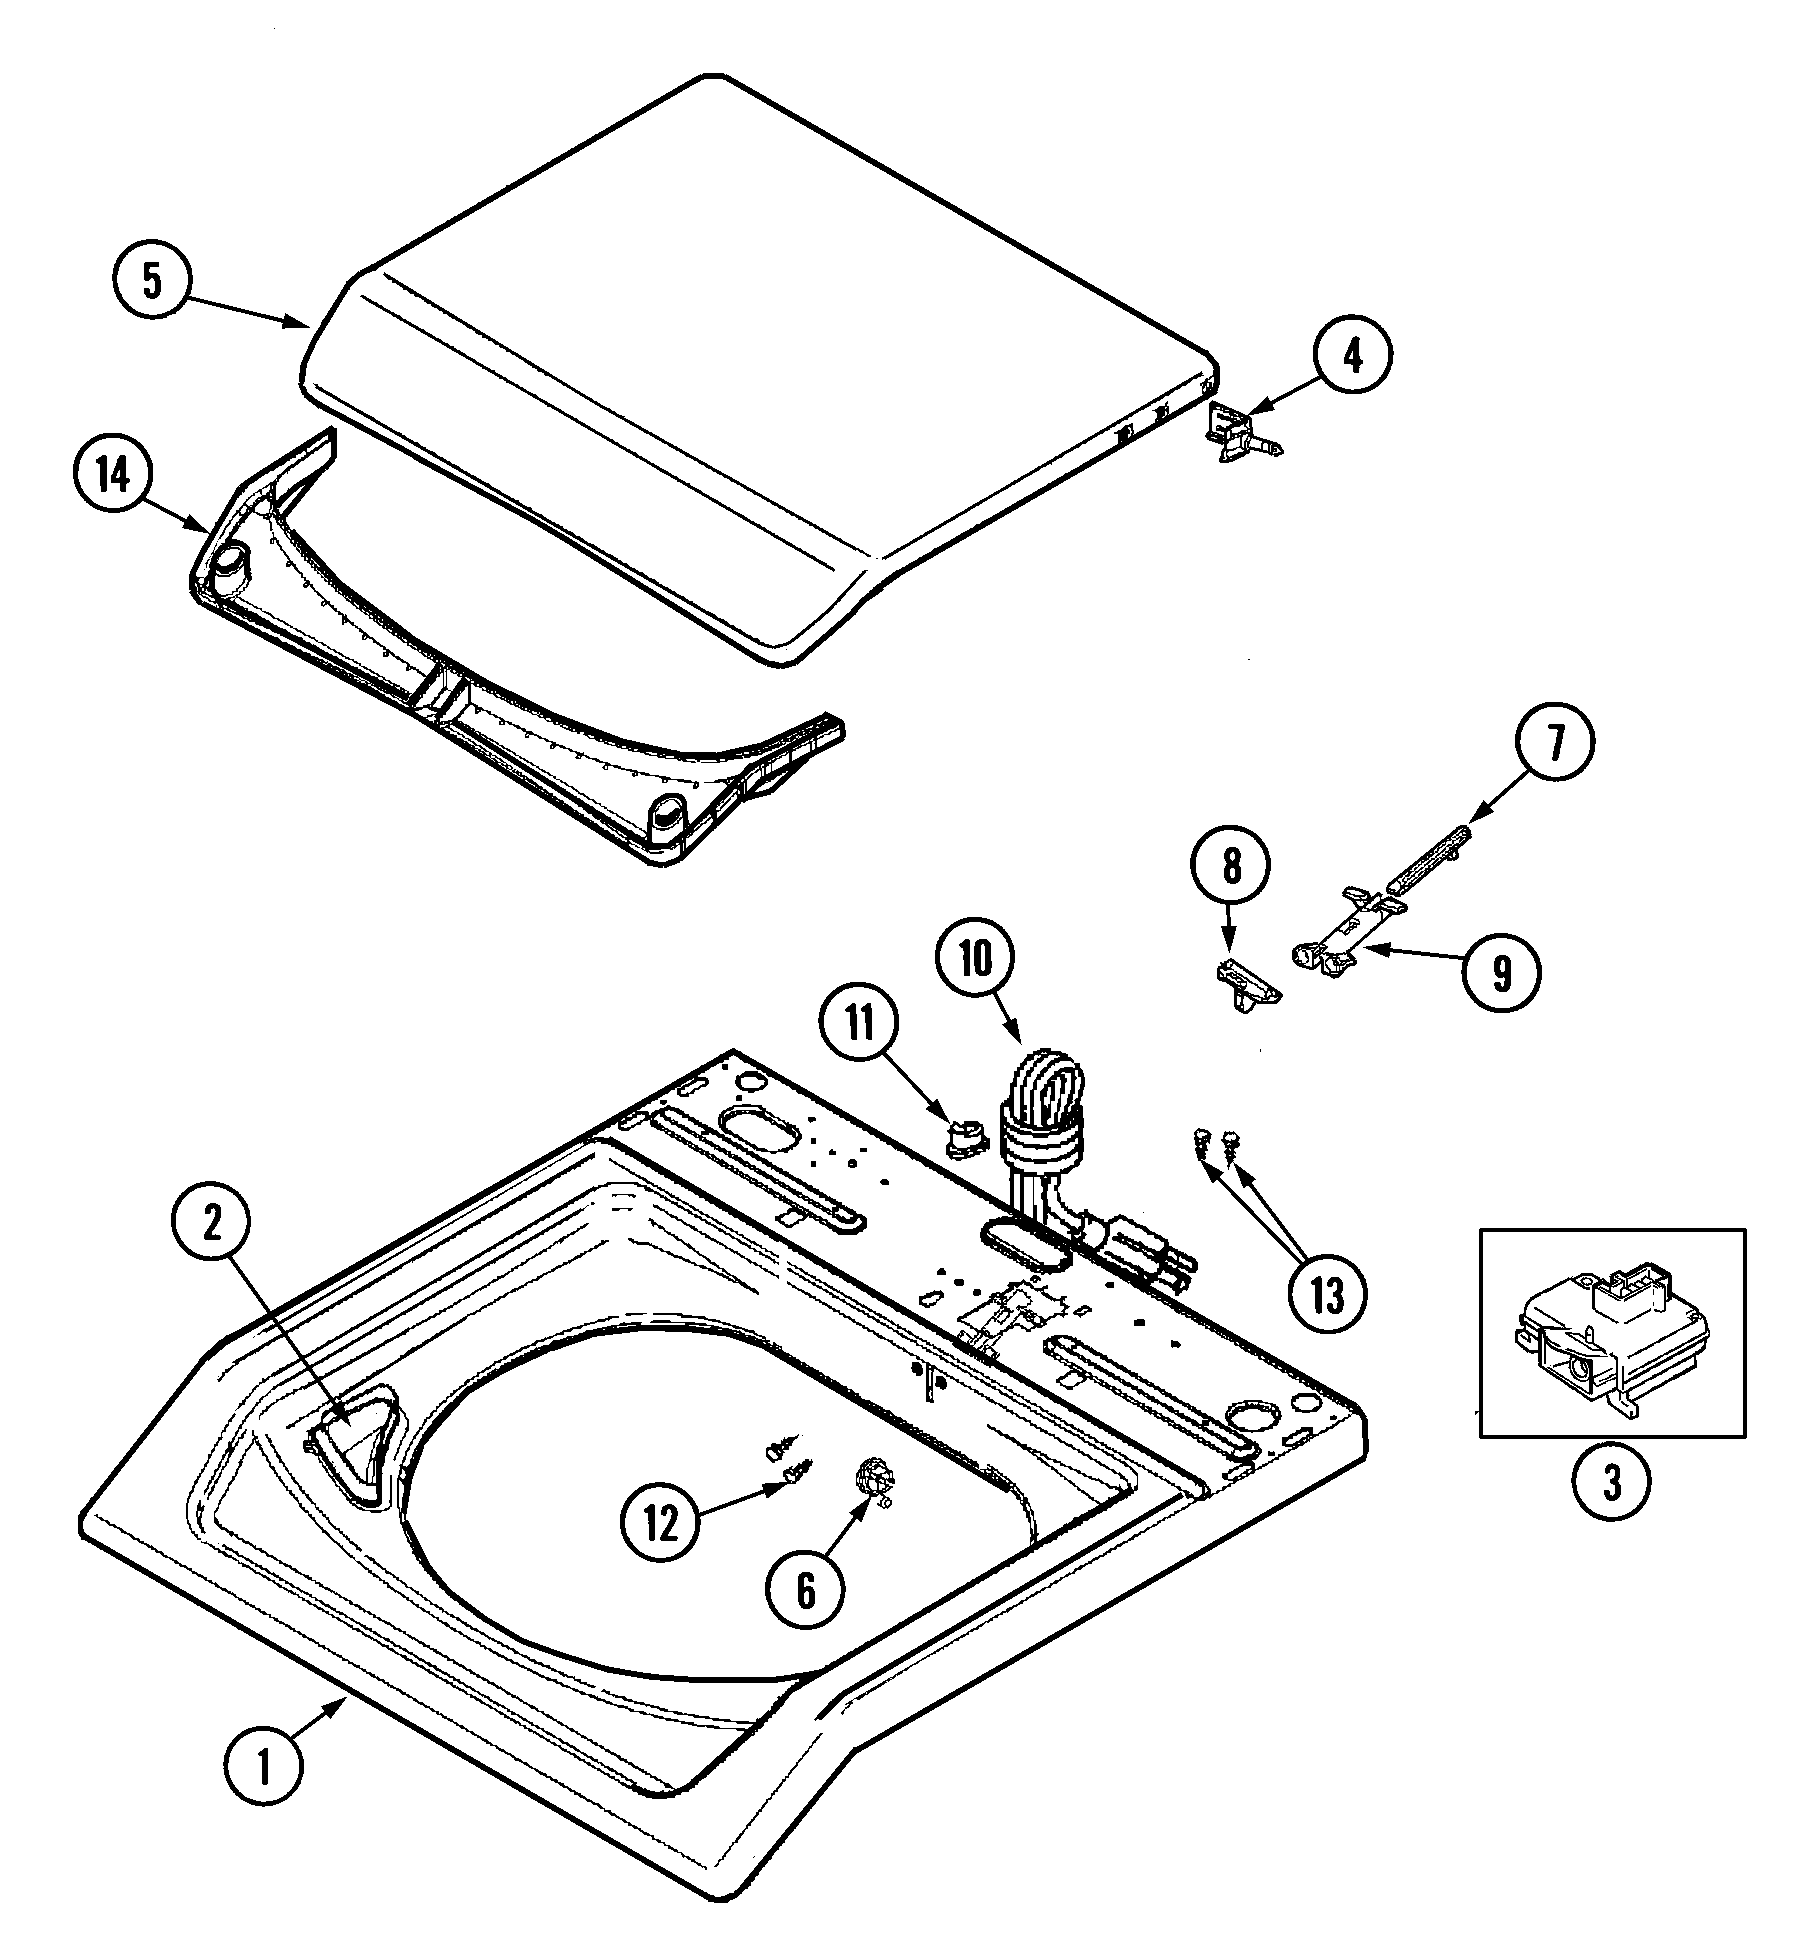 maytag neptune washer parts diagram